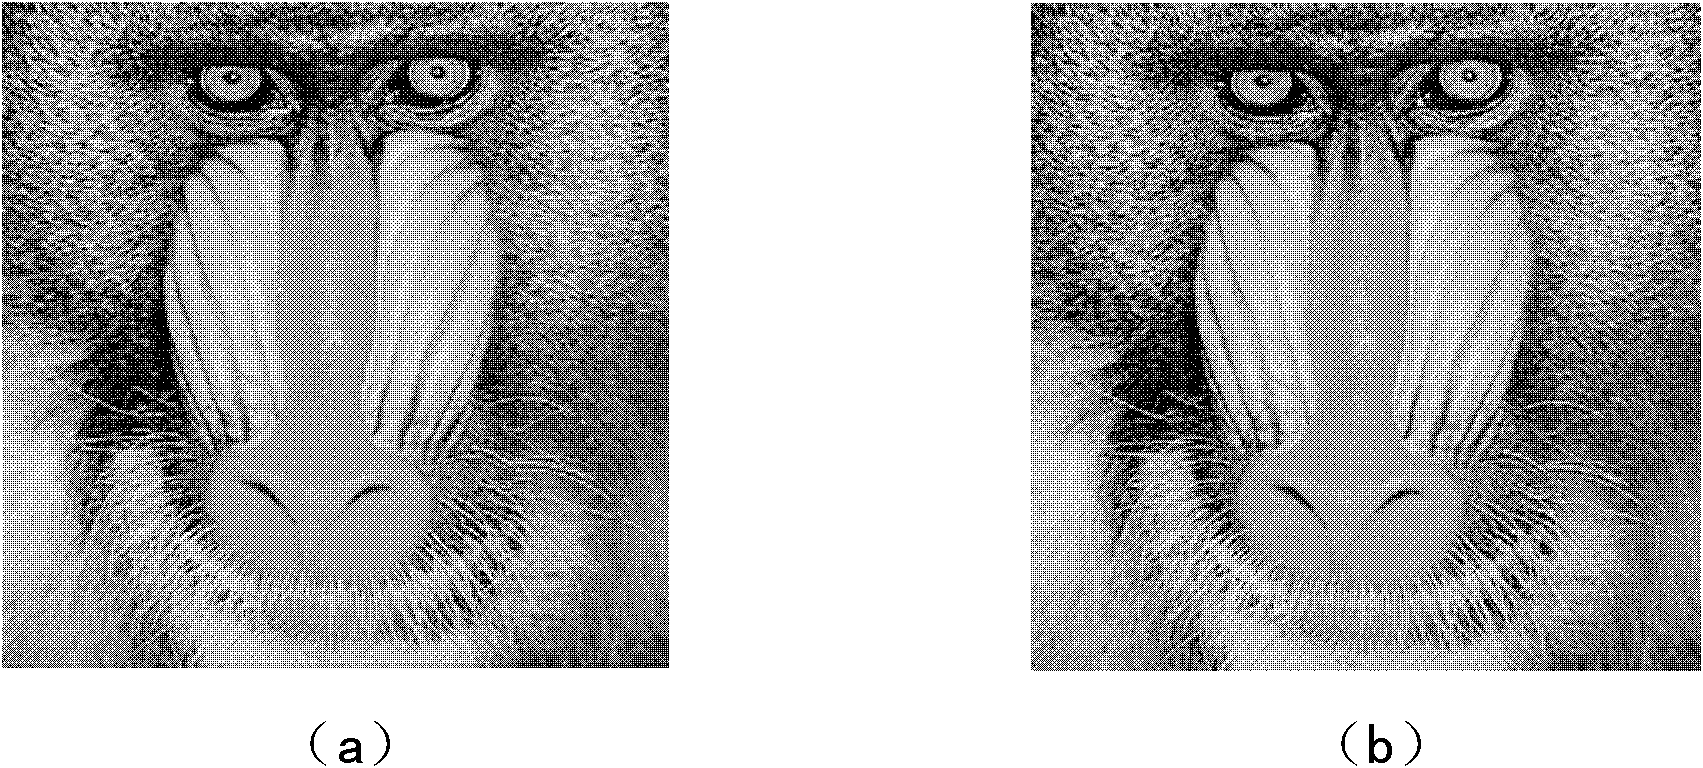 Reversible watermark method utilizing histogram shifting